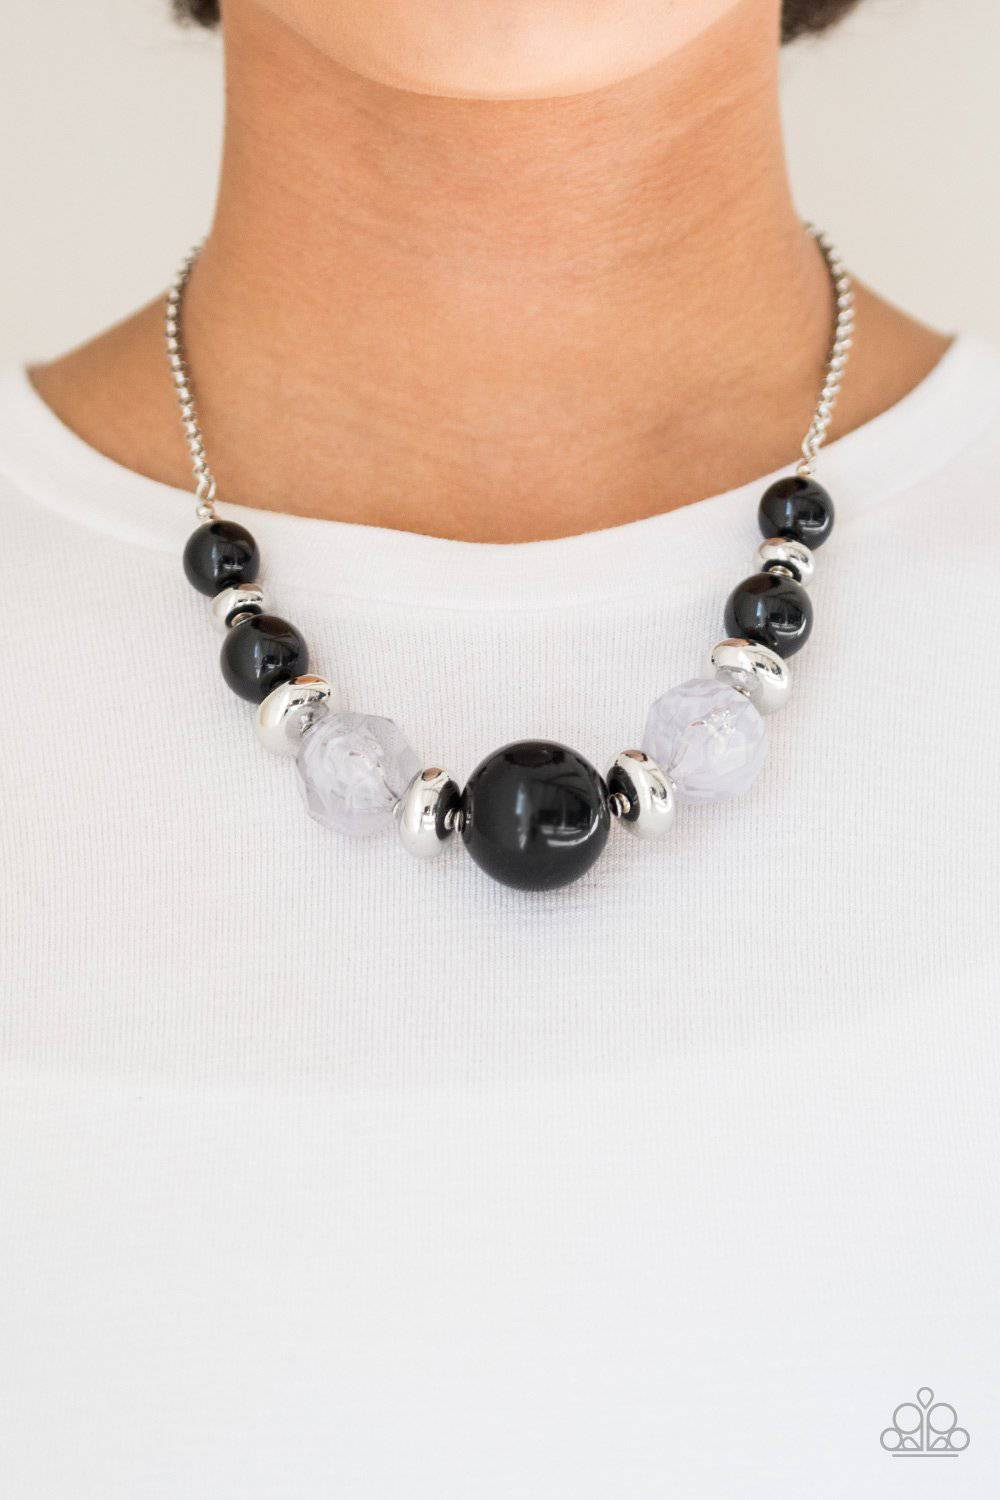 Daytime Drama - Black & Silver Bead Necklace - Paparazzi Accessories - GlaMarous Titi Jewels